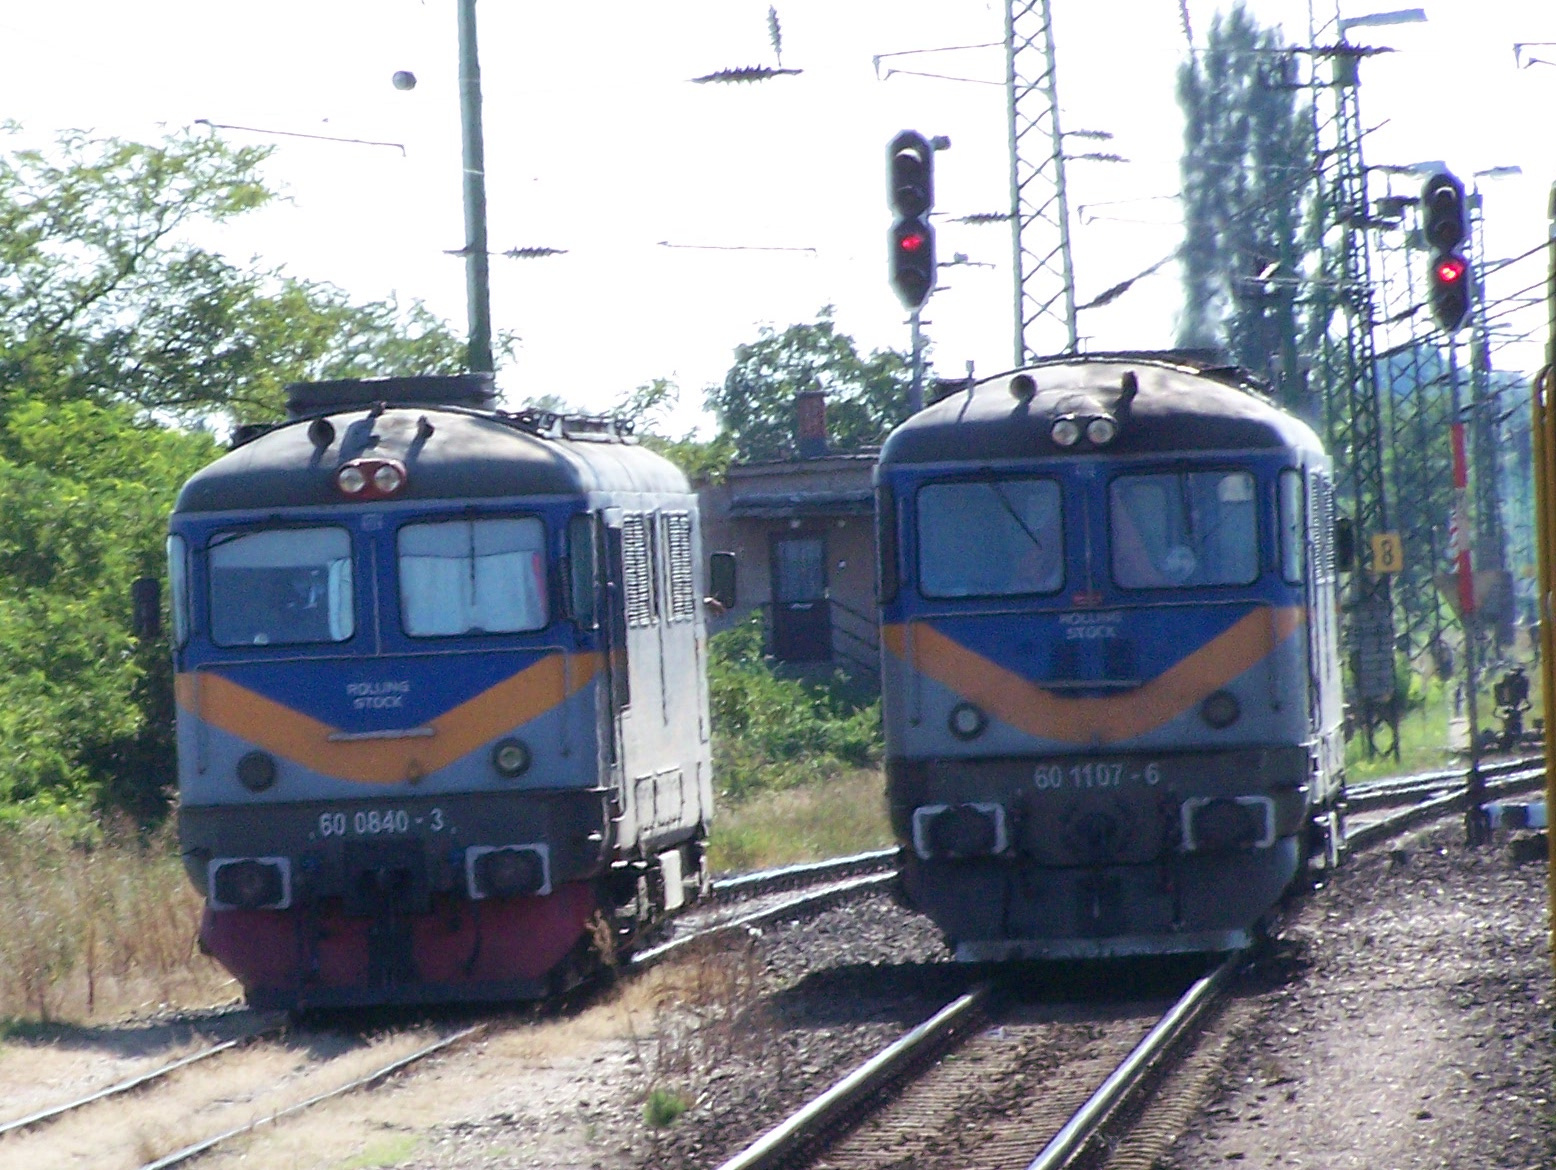 TH RS 60 1107-6 &amp; 60 0840-3 Sulzer Tárnokon